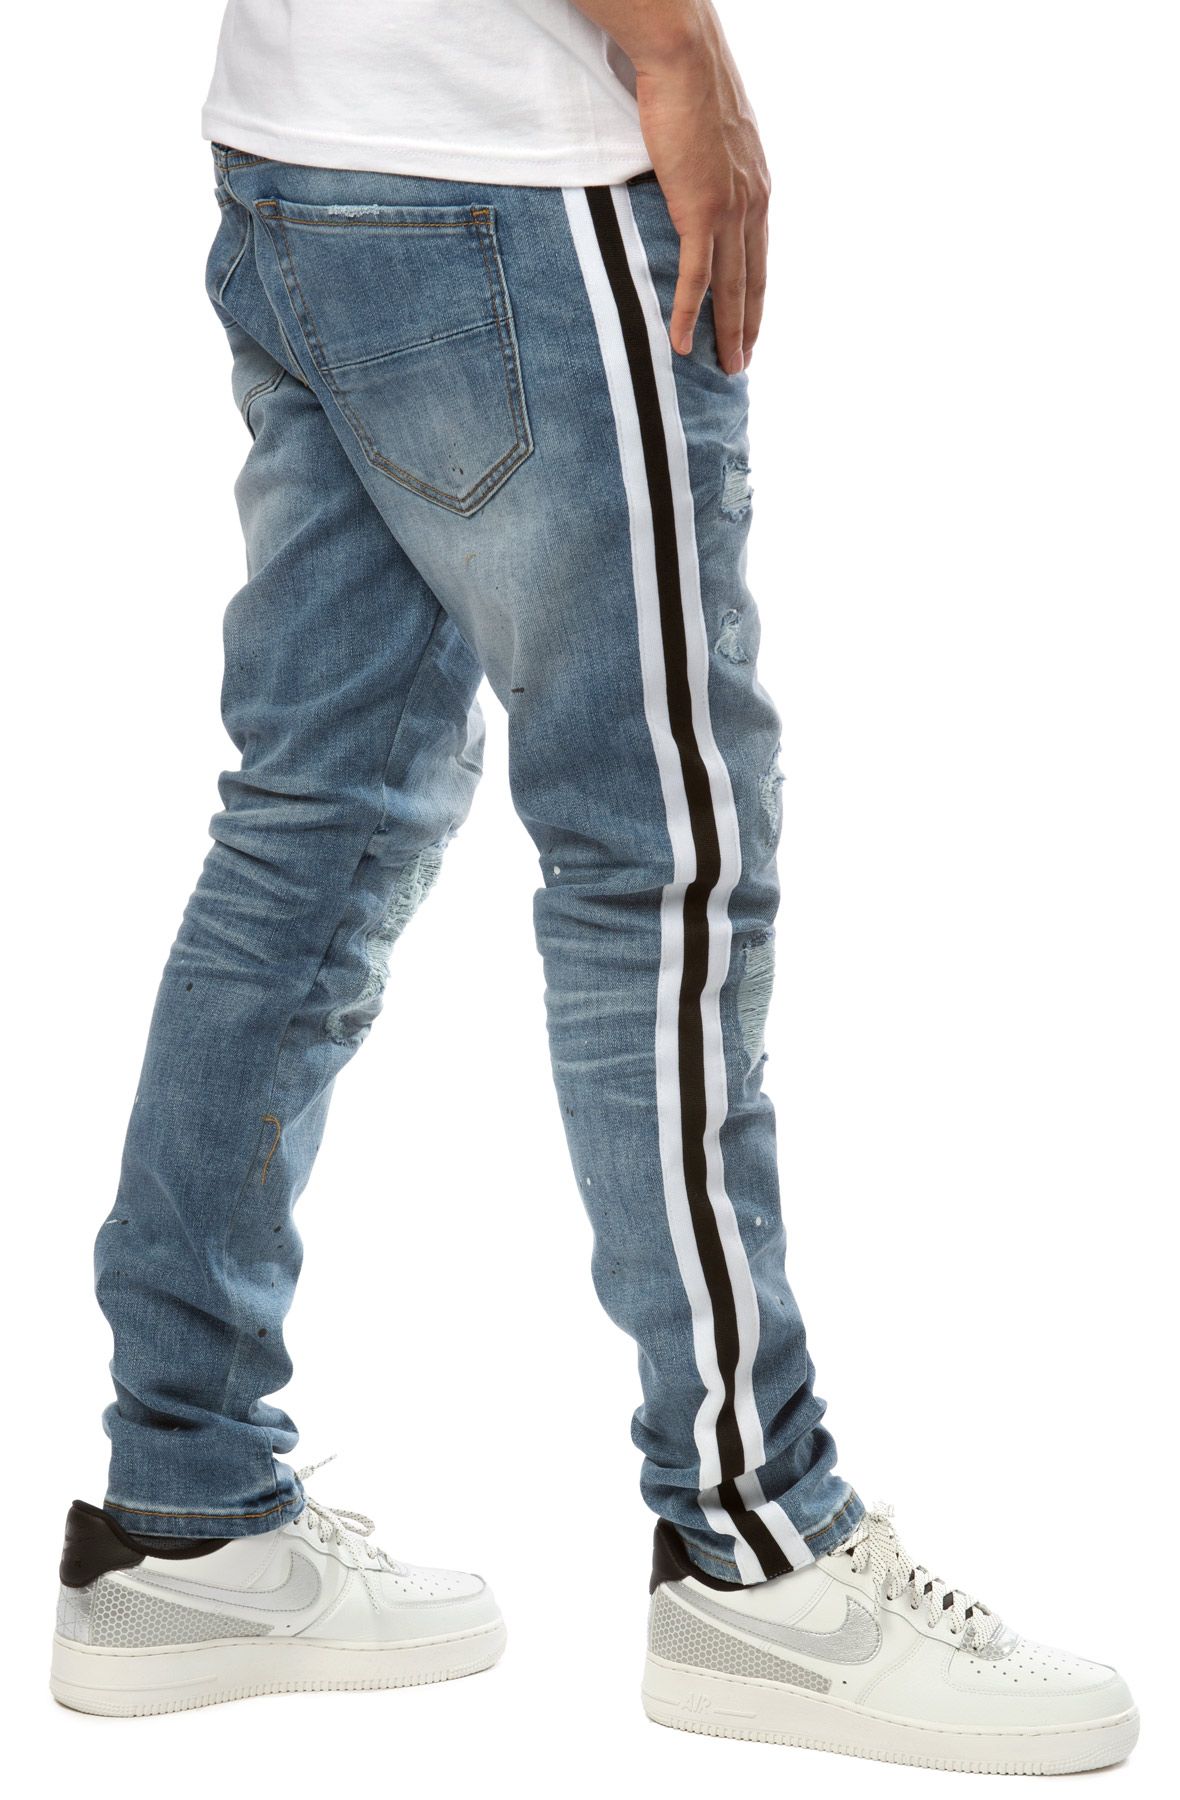 FOREIGN LOCALS Bronson Striped Jeans FL-202068-BLUE - Shiekh